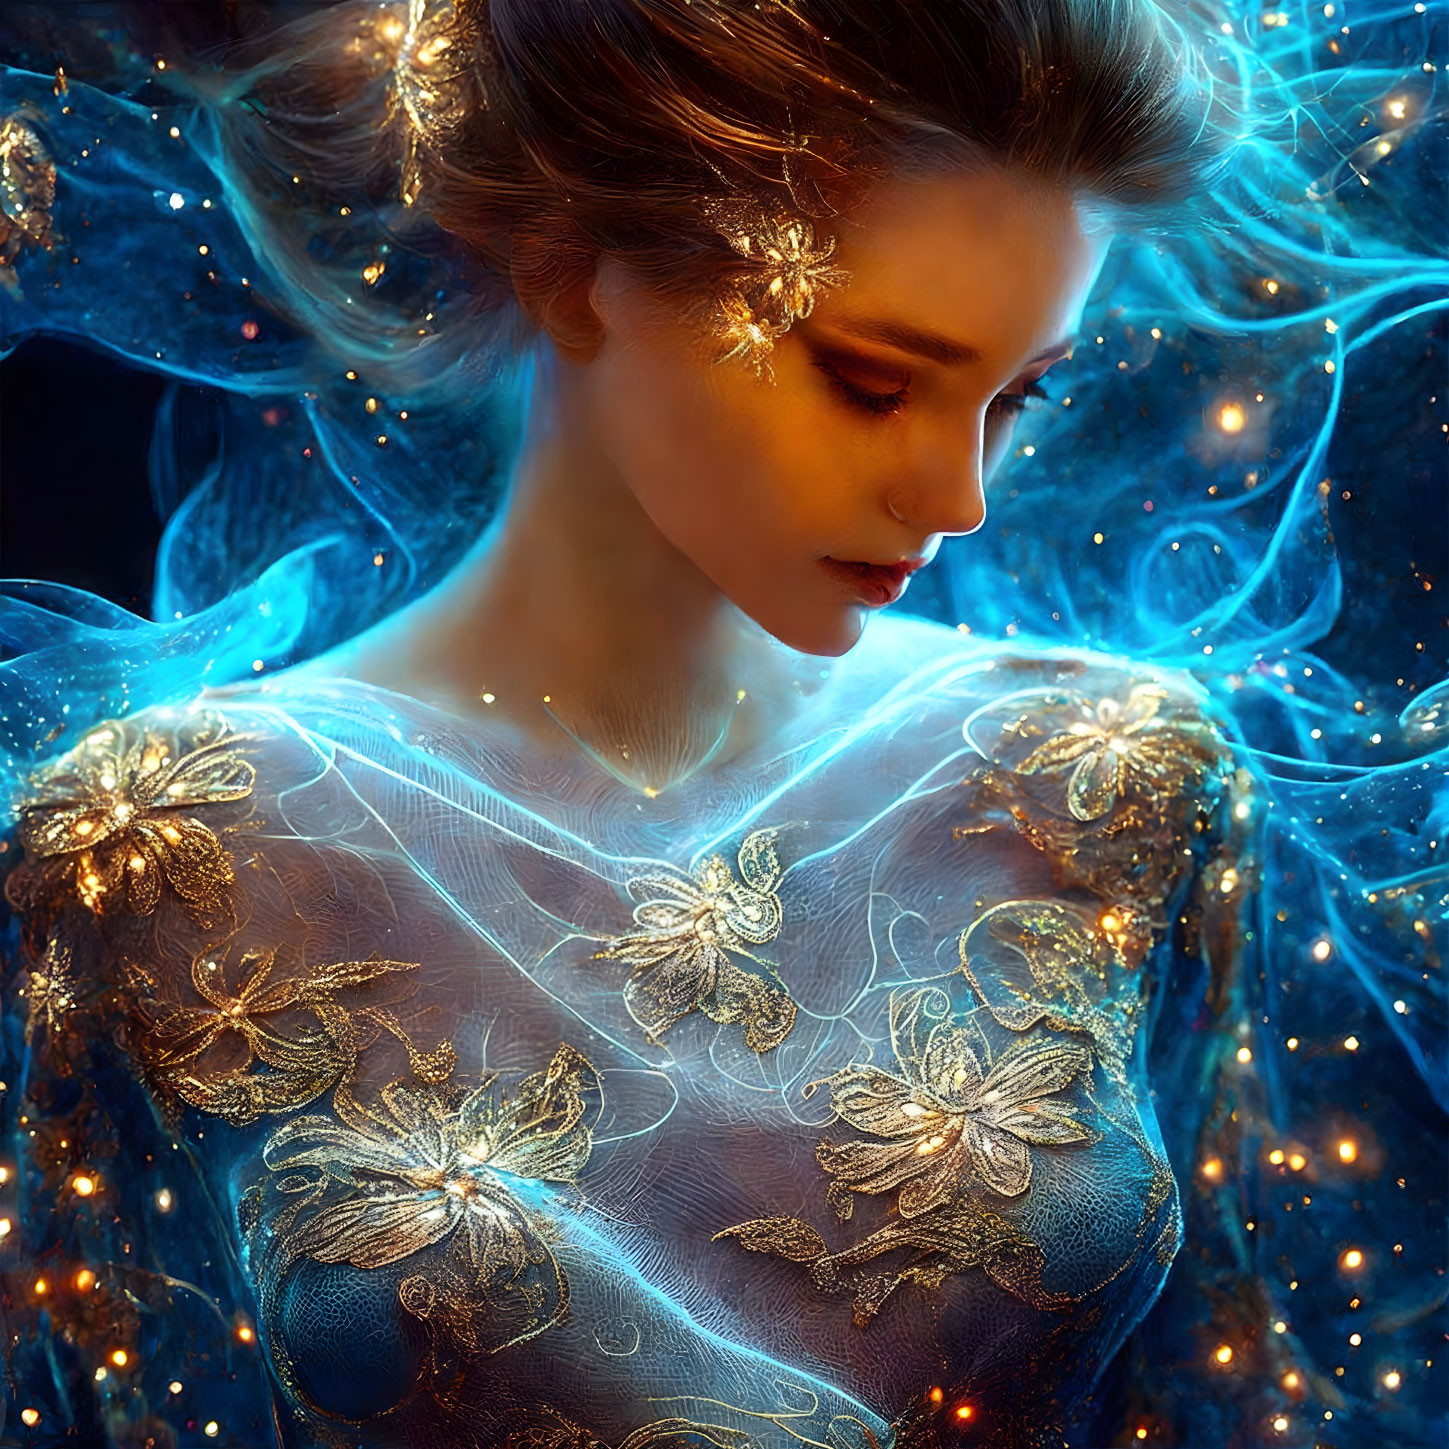 Bioluminescent stunning girl portrait #2